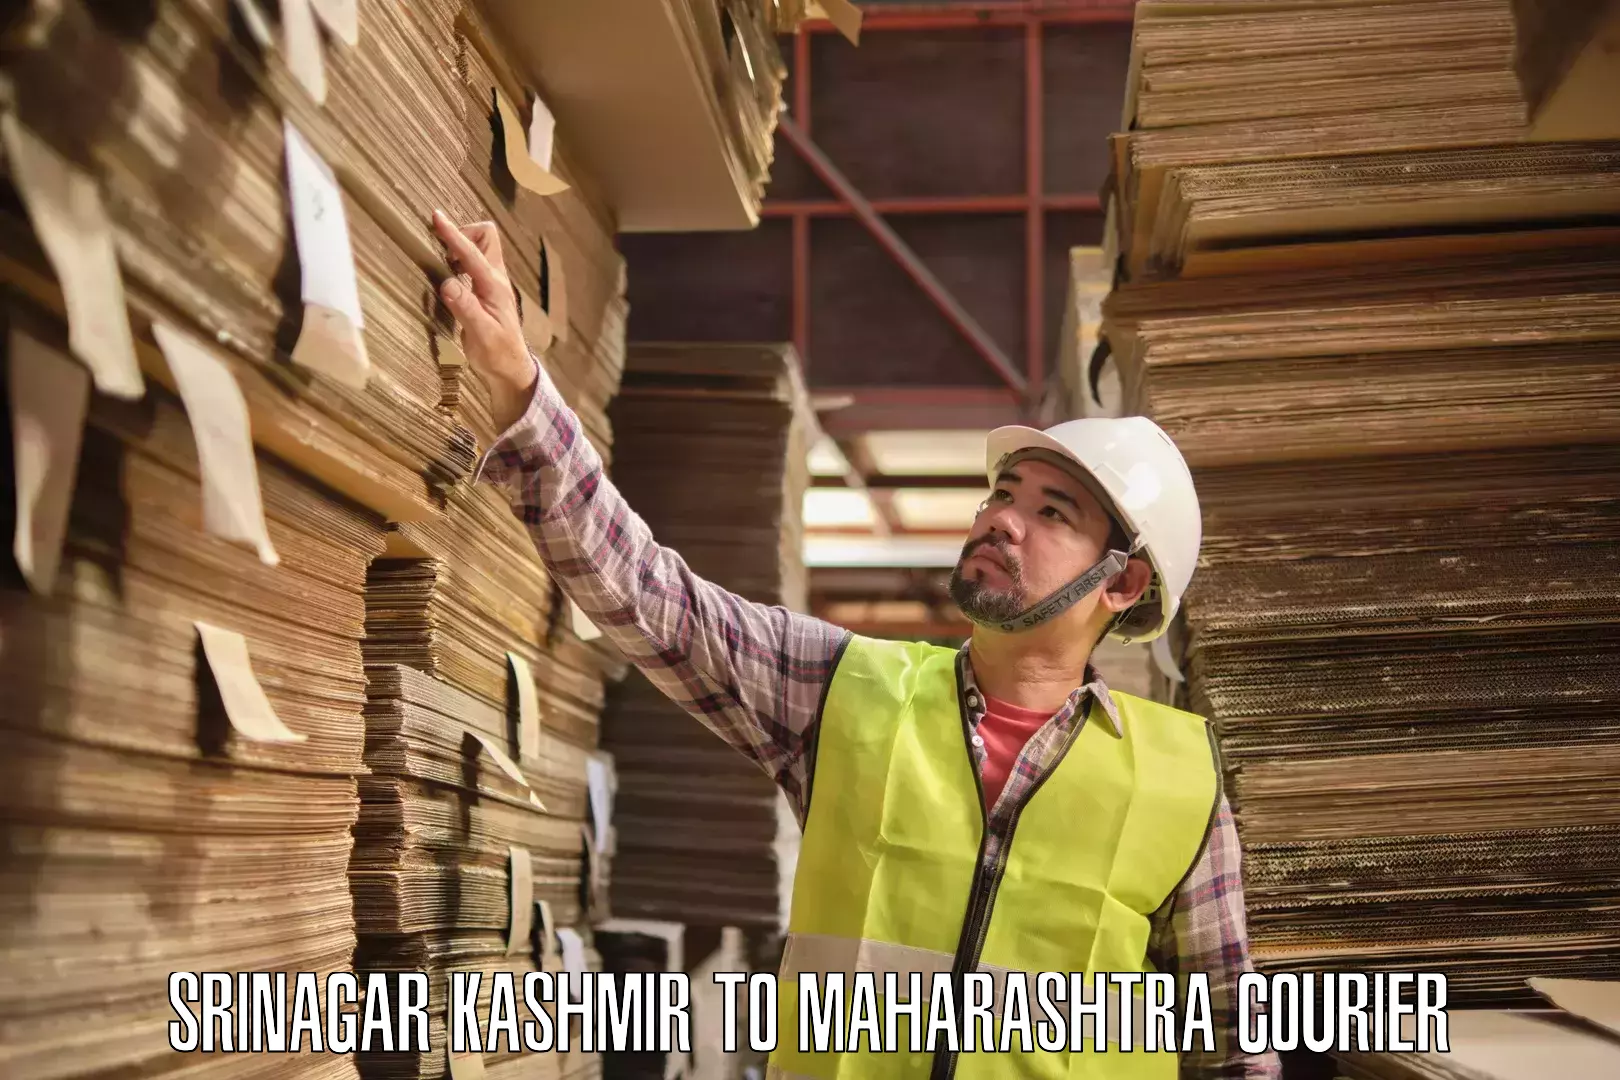 Door-to-door freight service Srinagar Kashmir to Homi Bhabha National Institute Mumbai